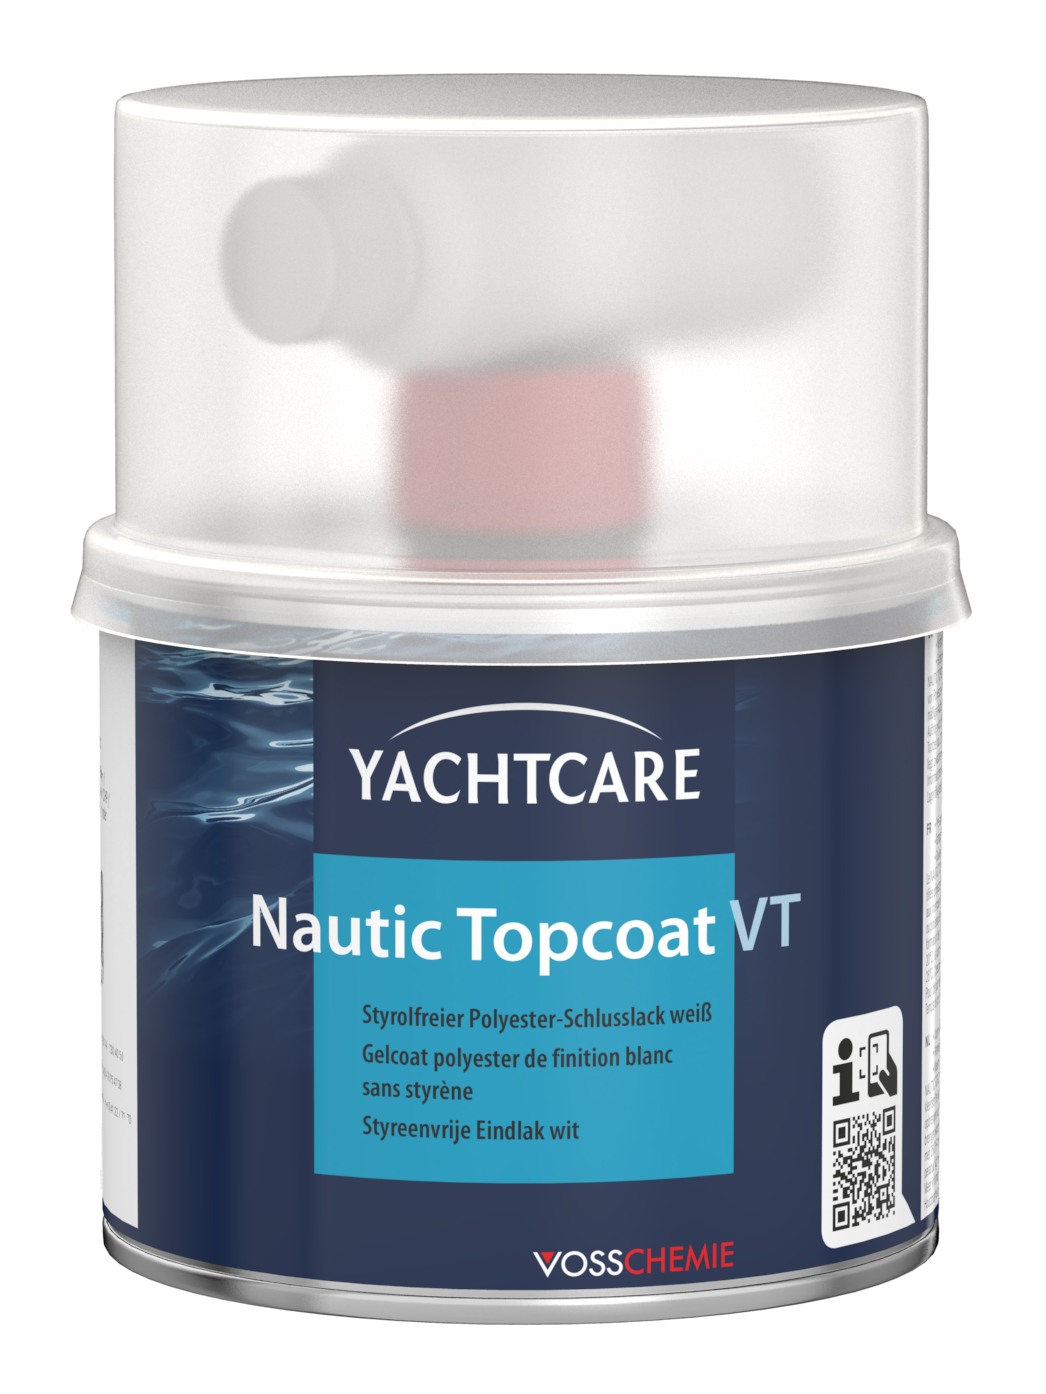 yachtcare nautic topcoat